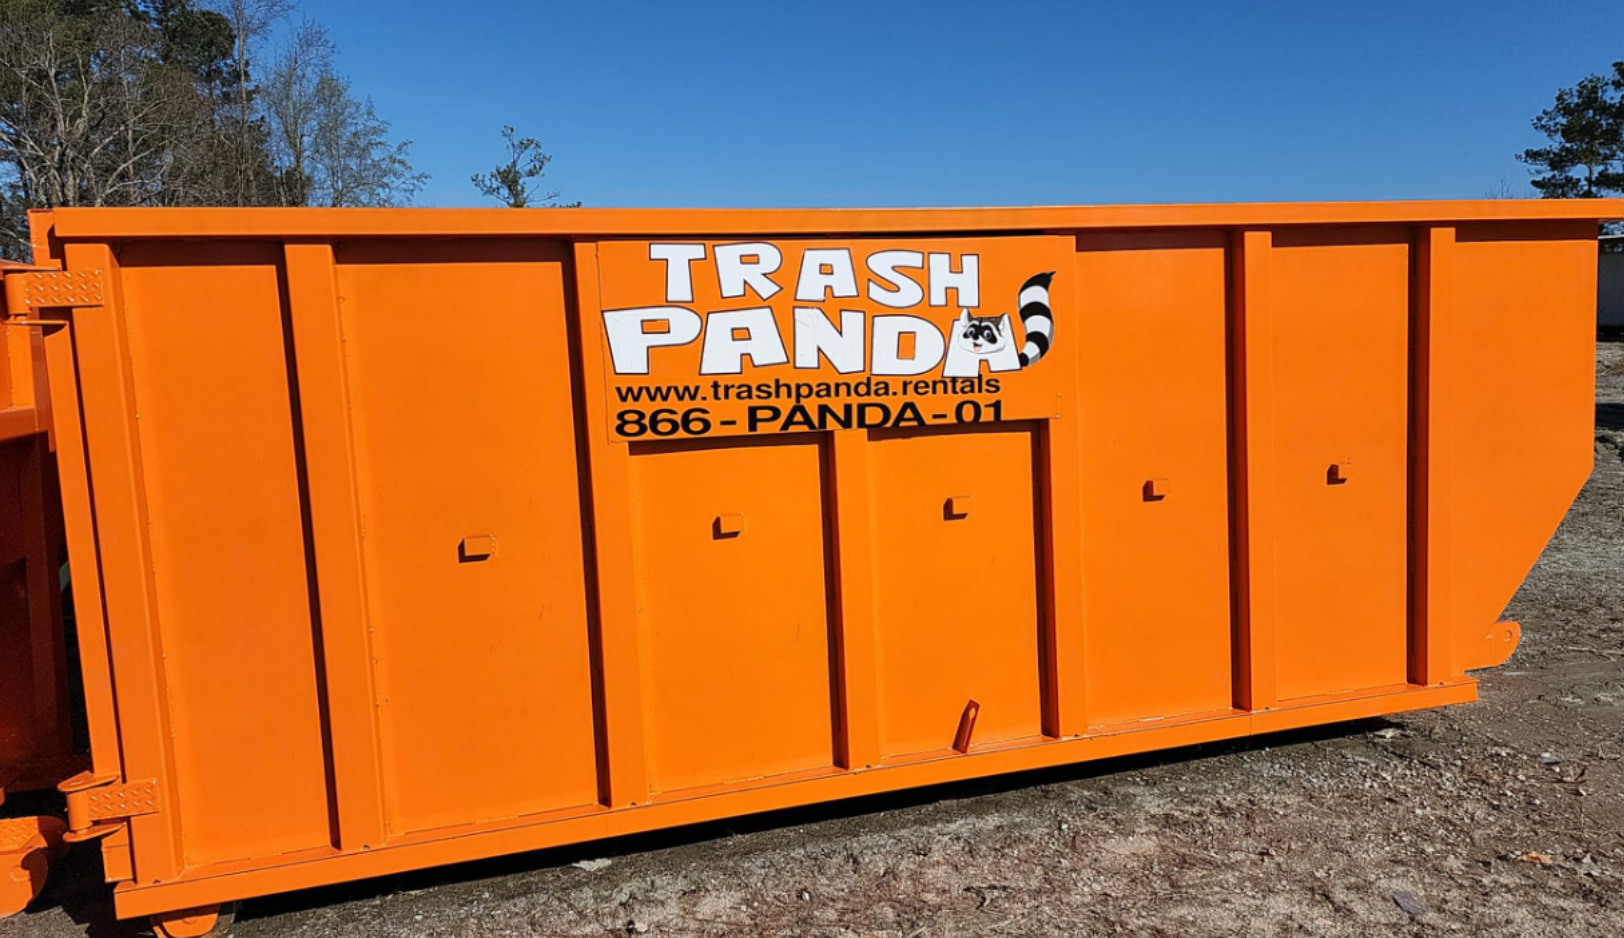 Trash panda dumpster rentals in Georgia.